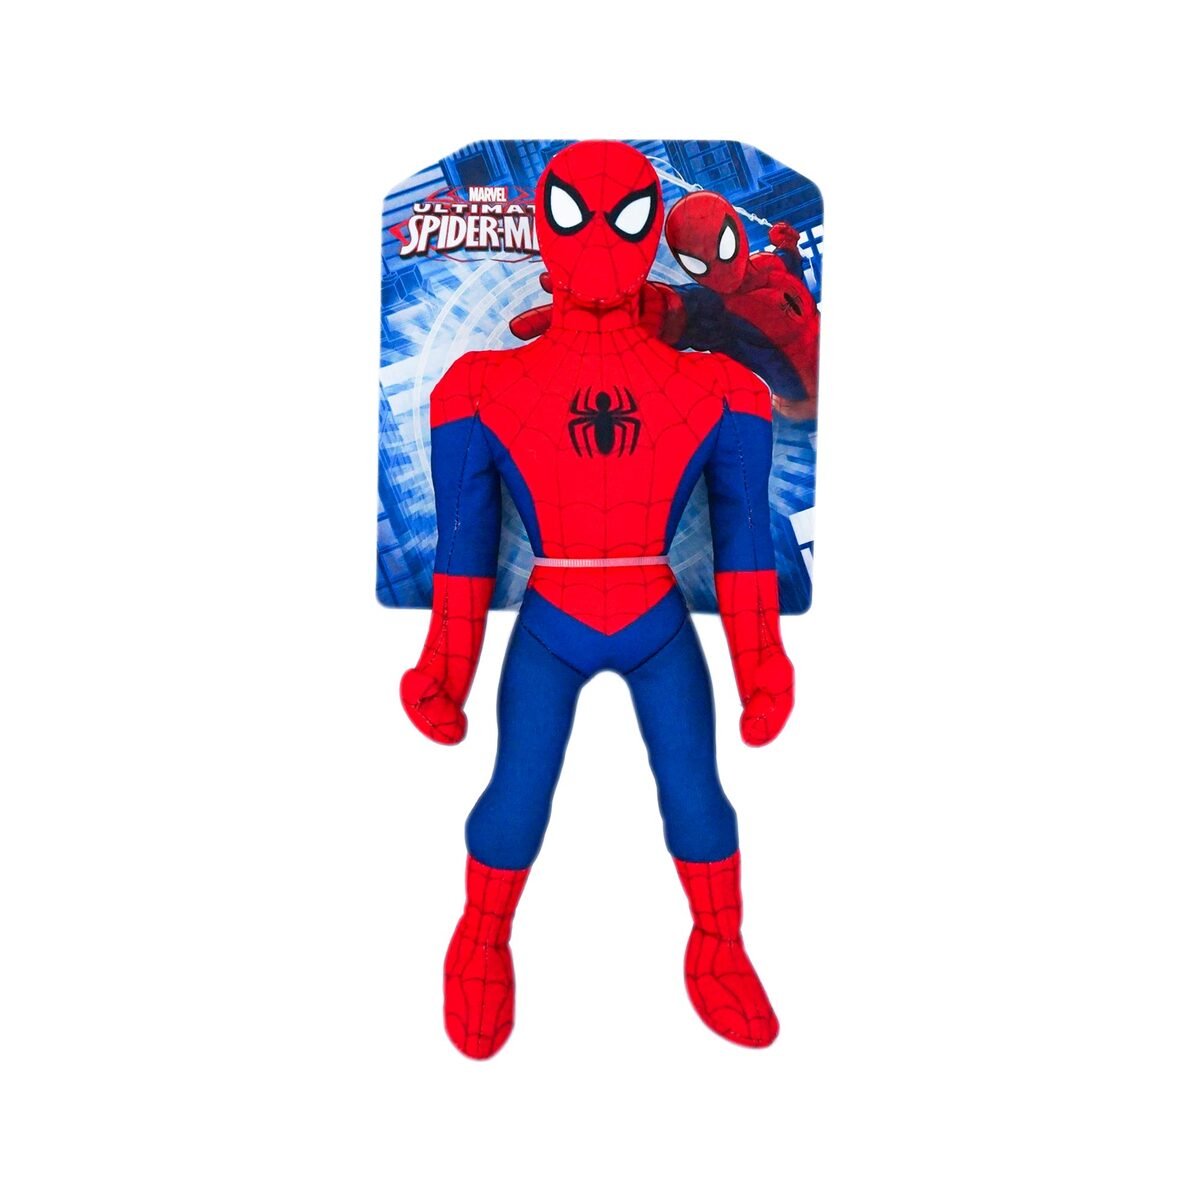 Spiderman Soft Plush 1601536 10inch